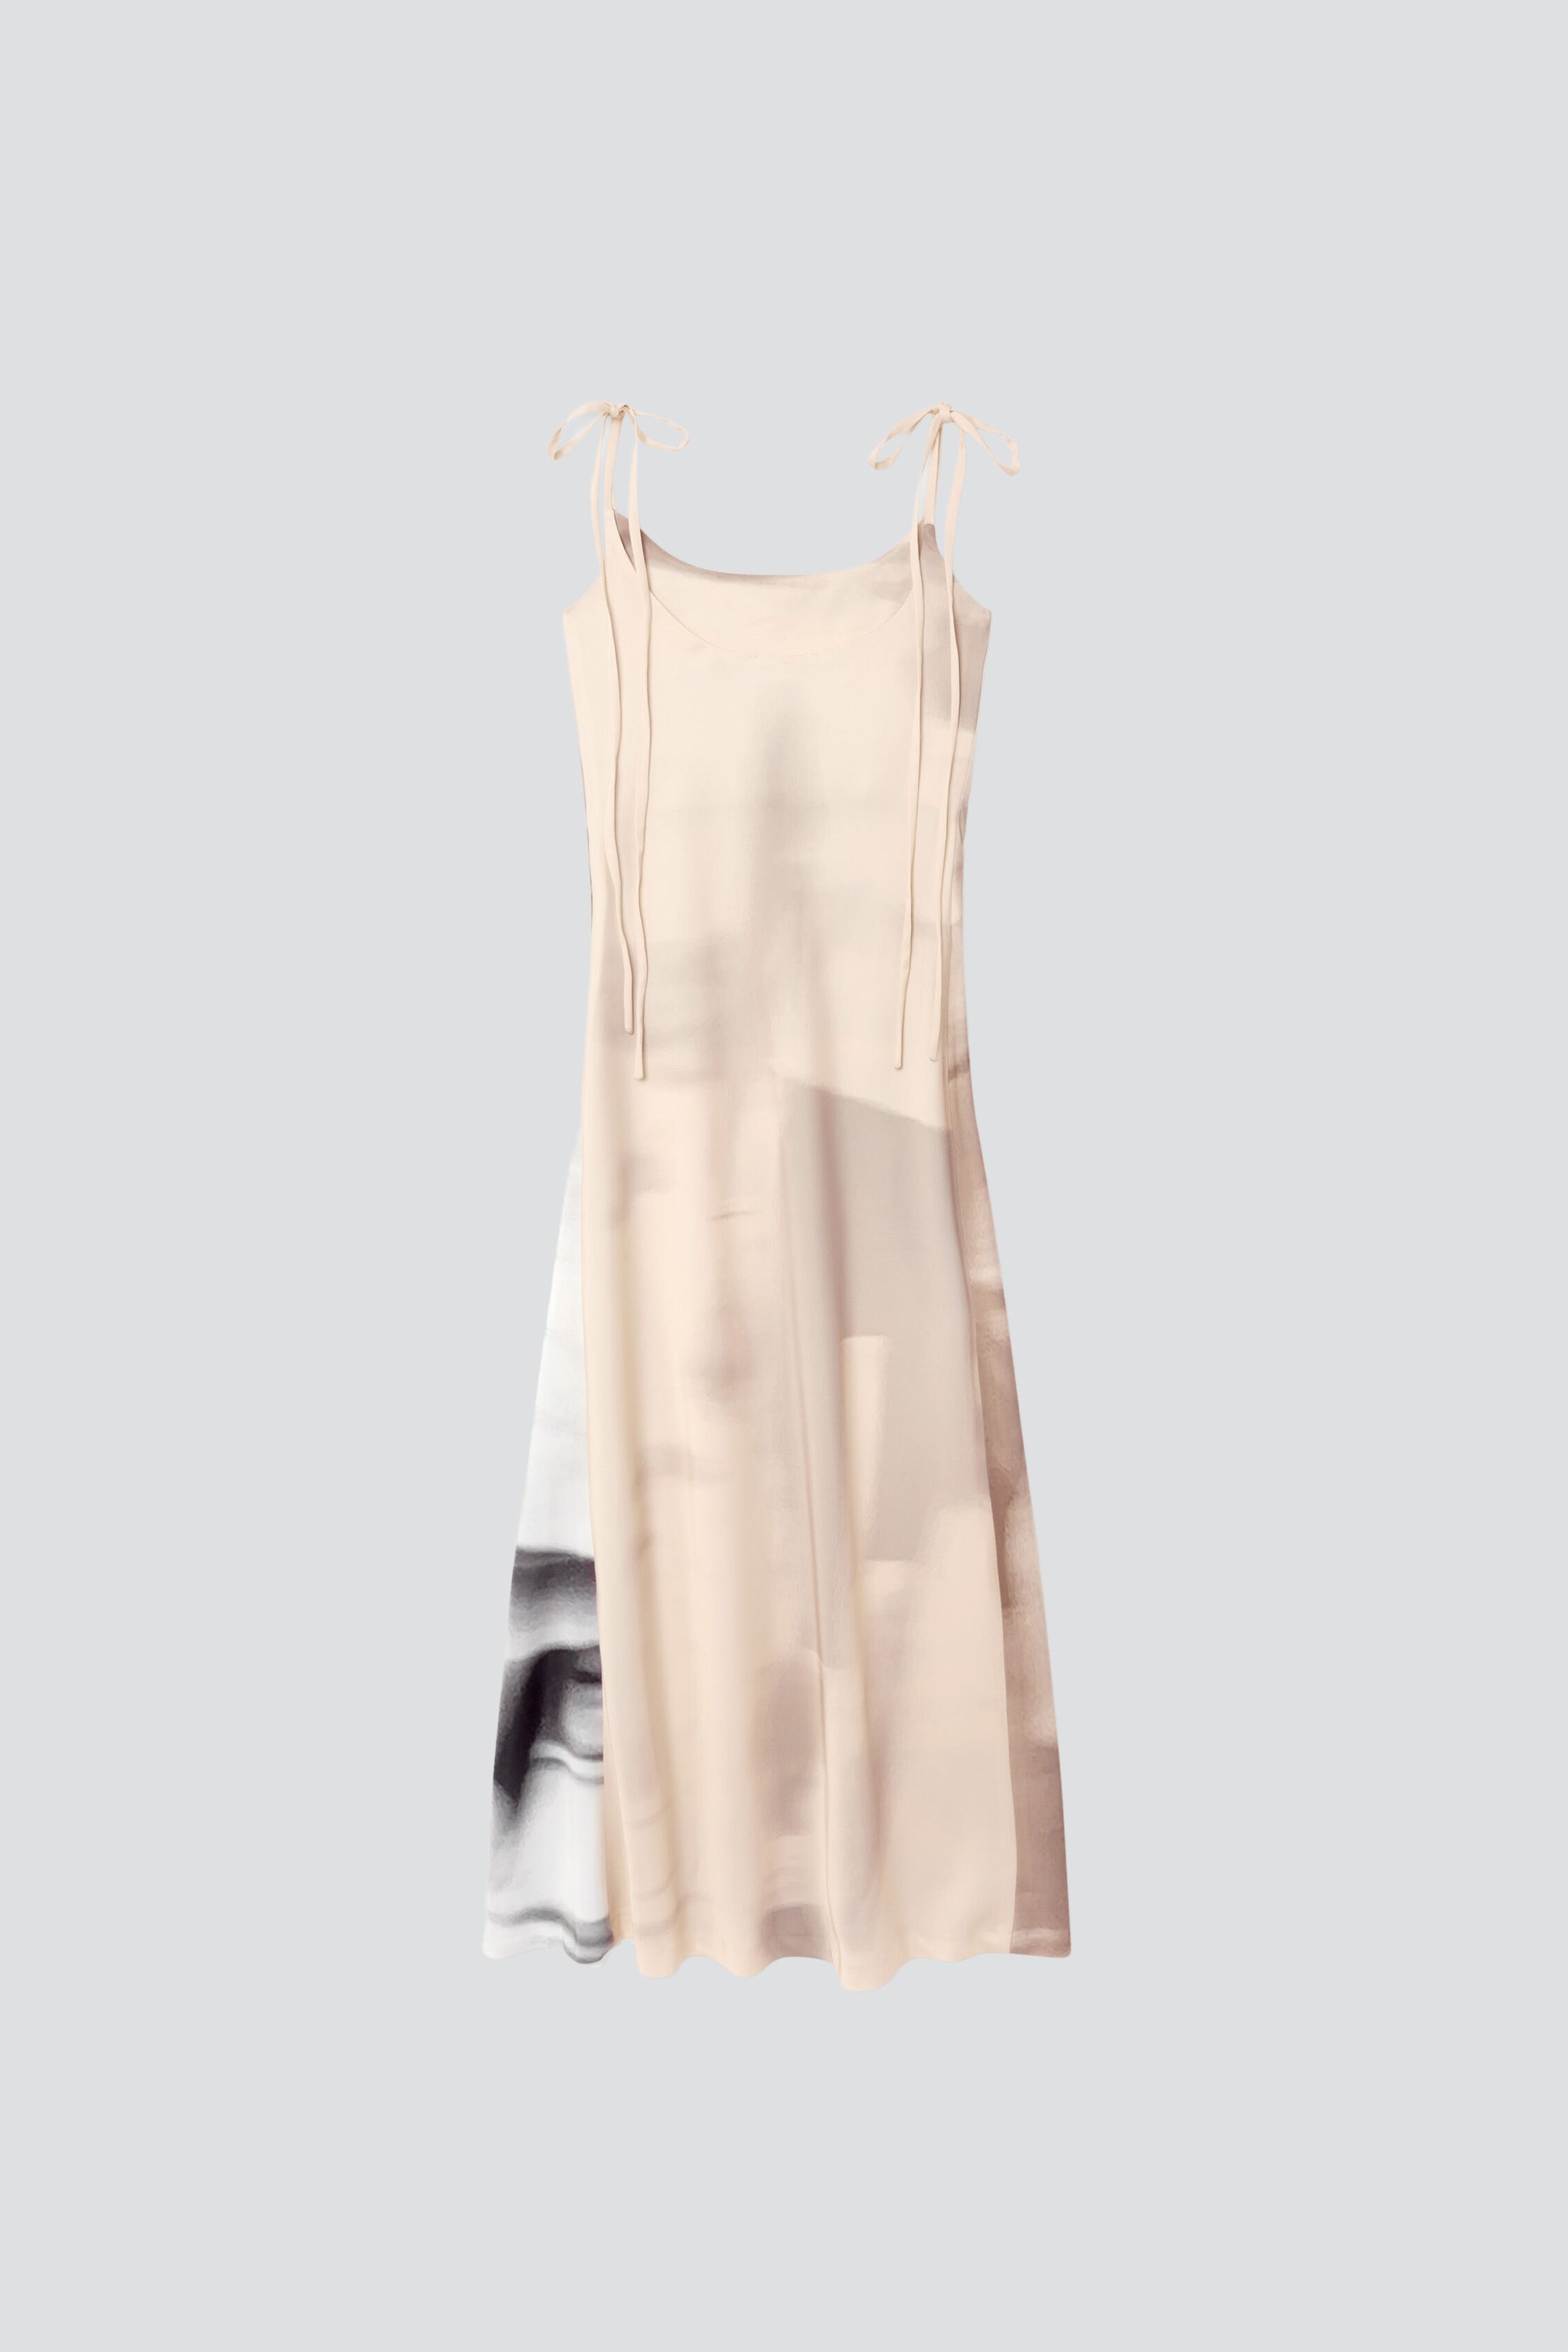 Silk Motion Blur Sepia Ankle Dress